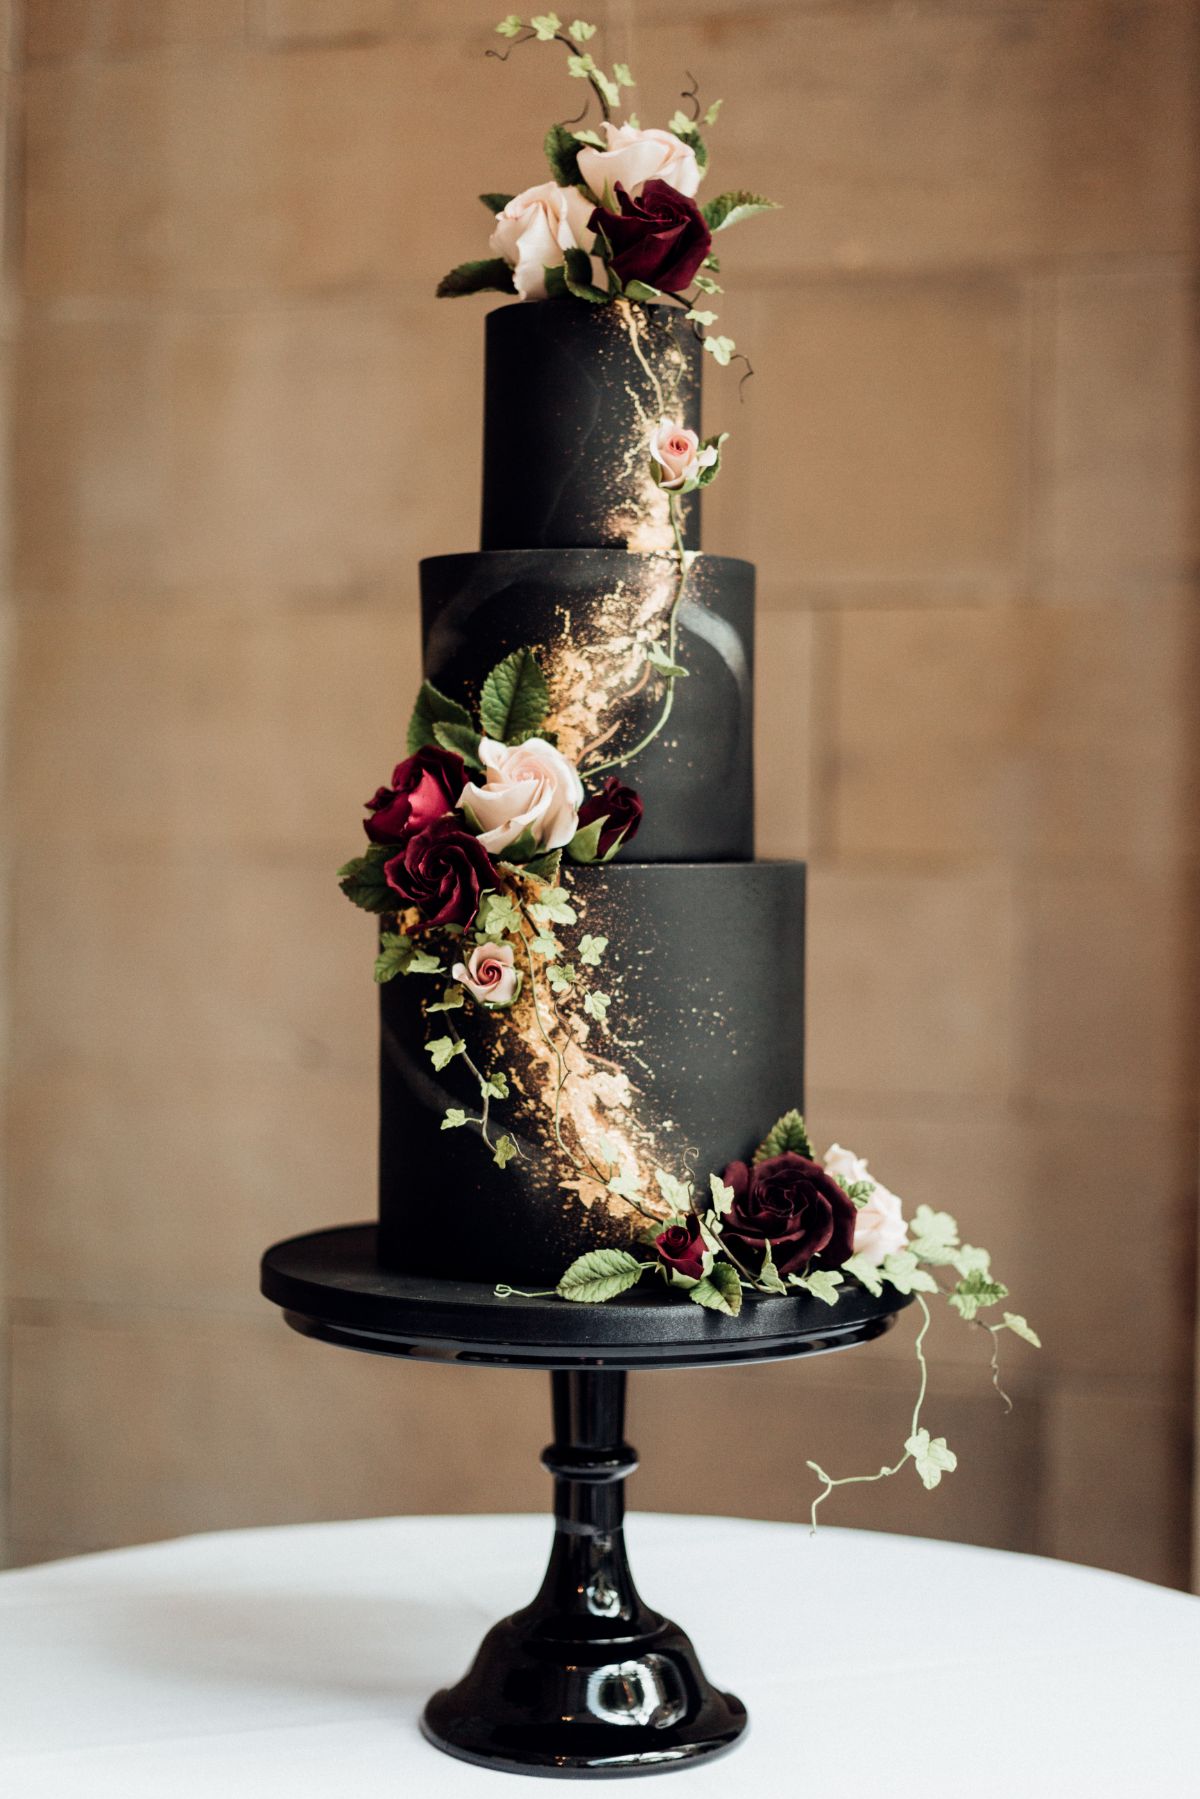 @benthecakeman's incredible black wedding cake - yes those are real sugar flowers!